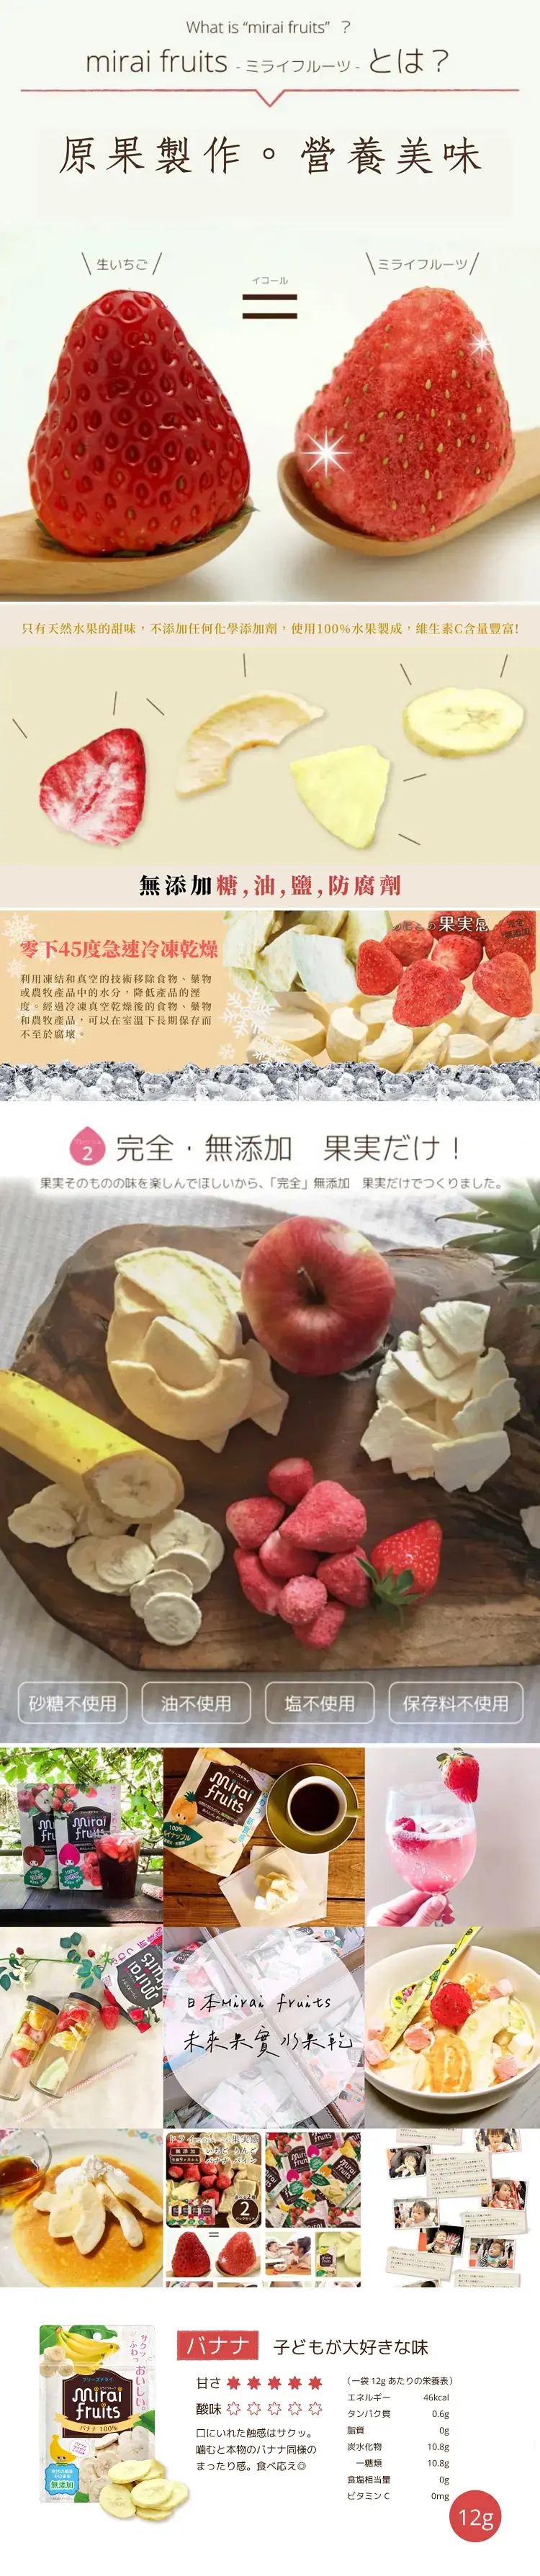 mirai fruits 未來果實水果乾/ 香蕉 